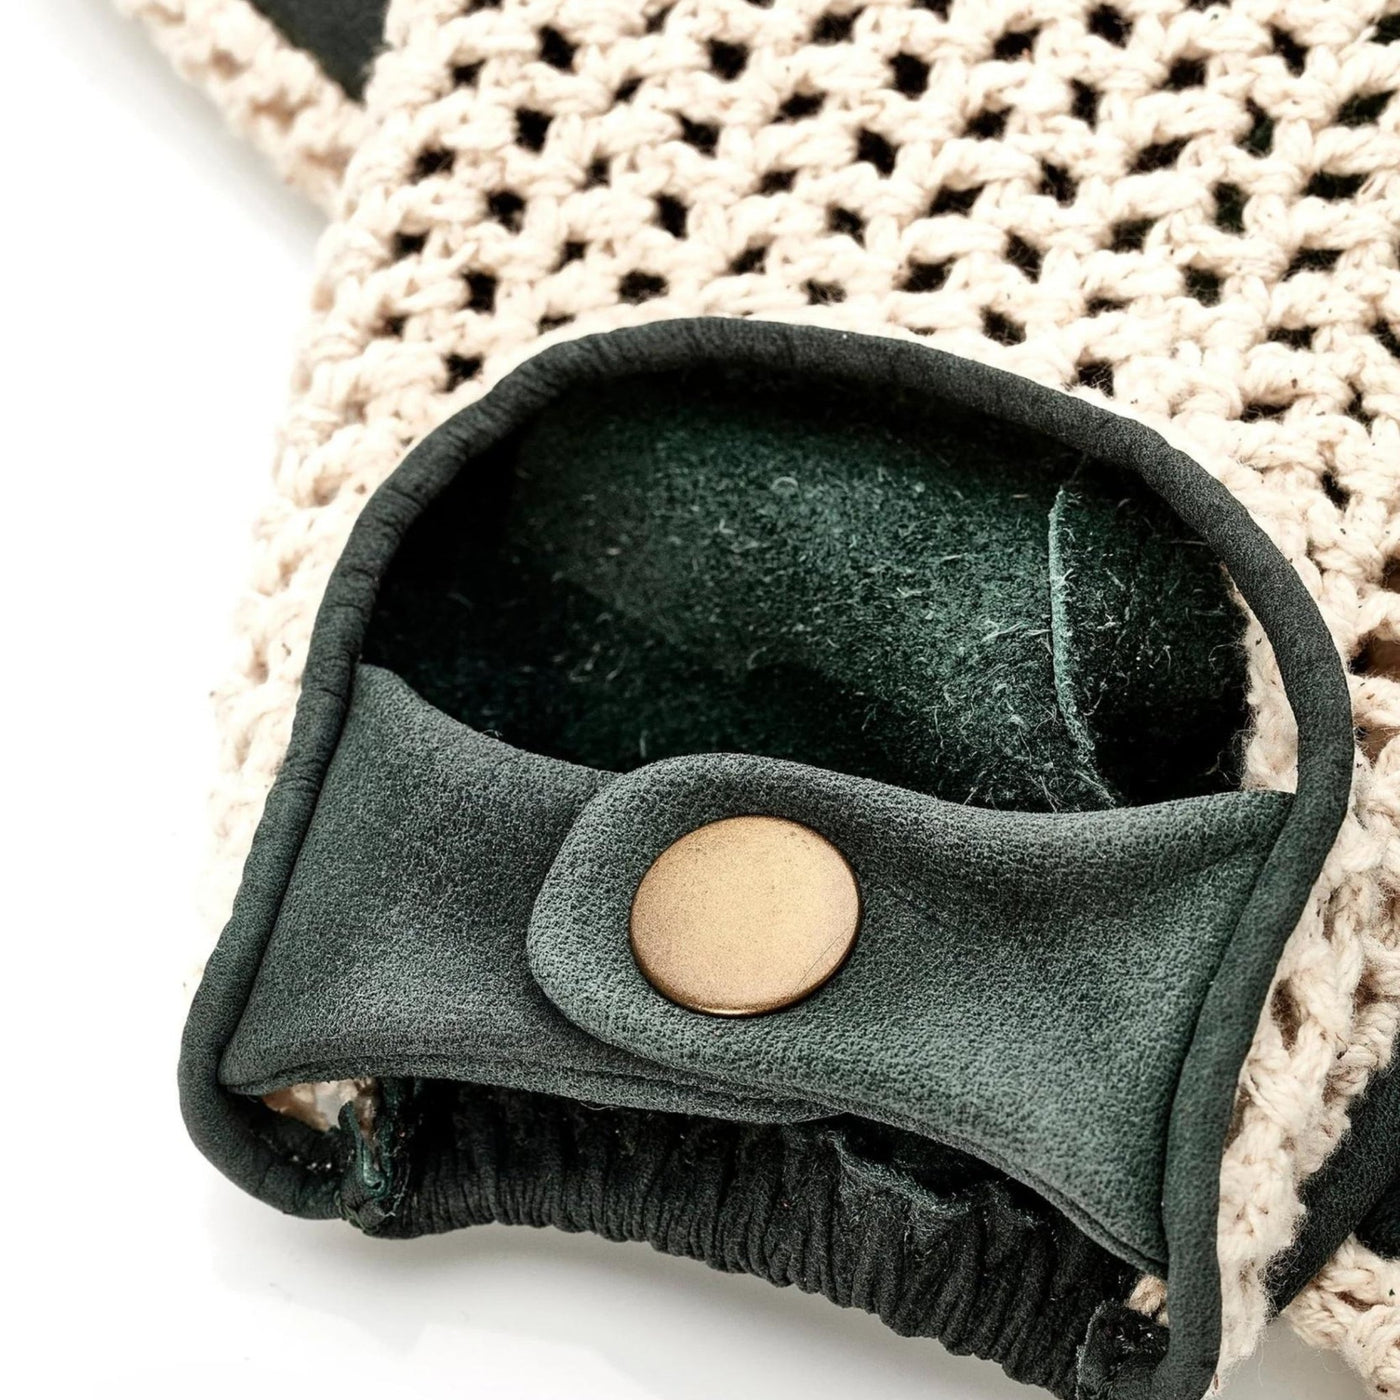 Crochet Knit Leather Driving Gloves - Green - MODEST VINTAGE PLAYER LTD